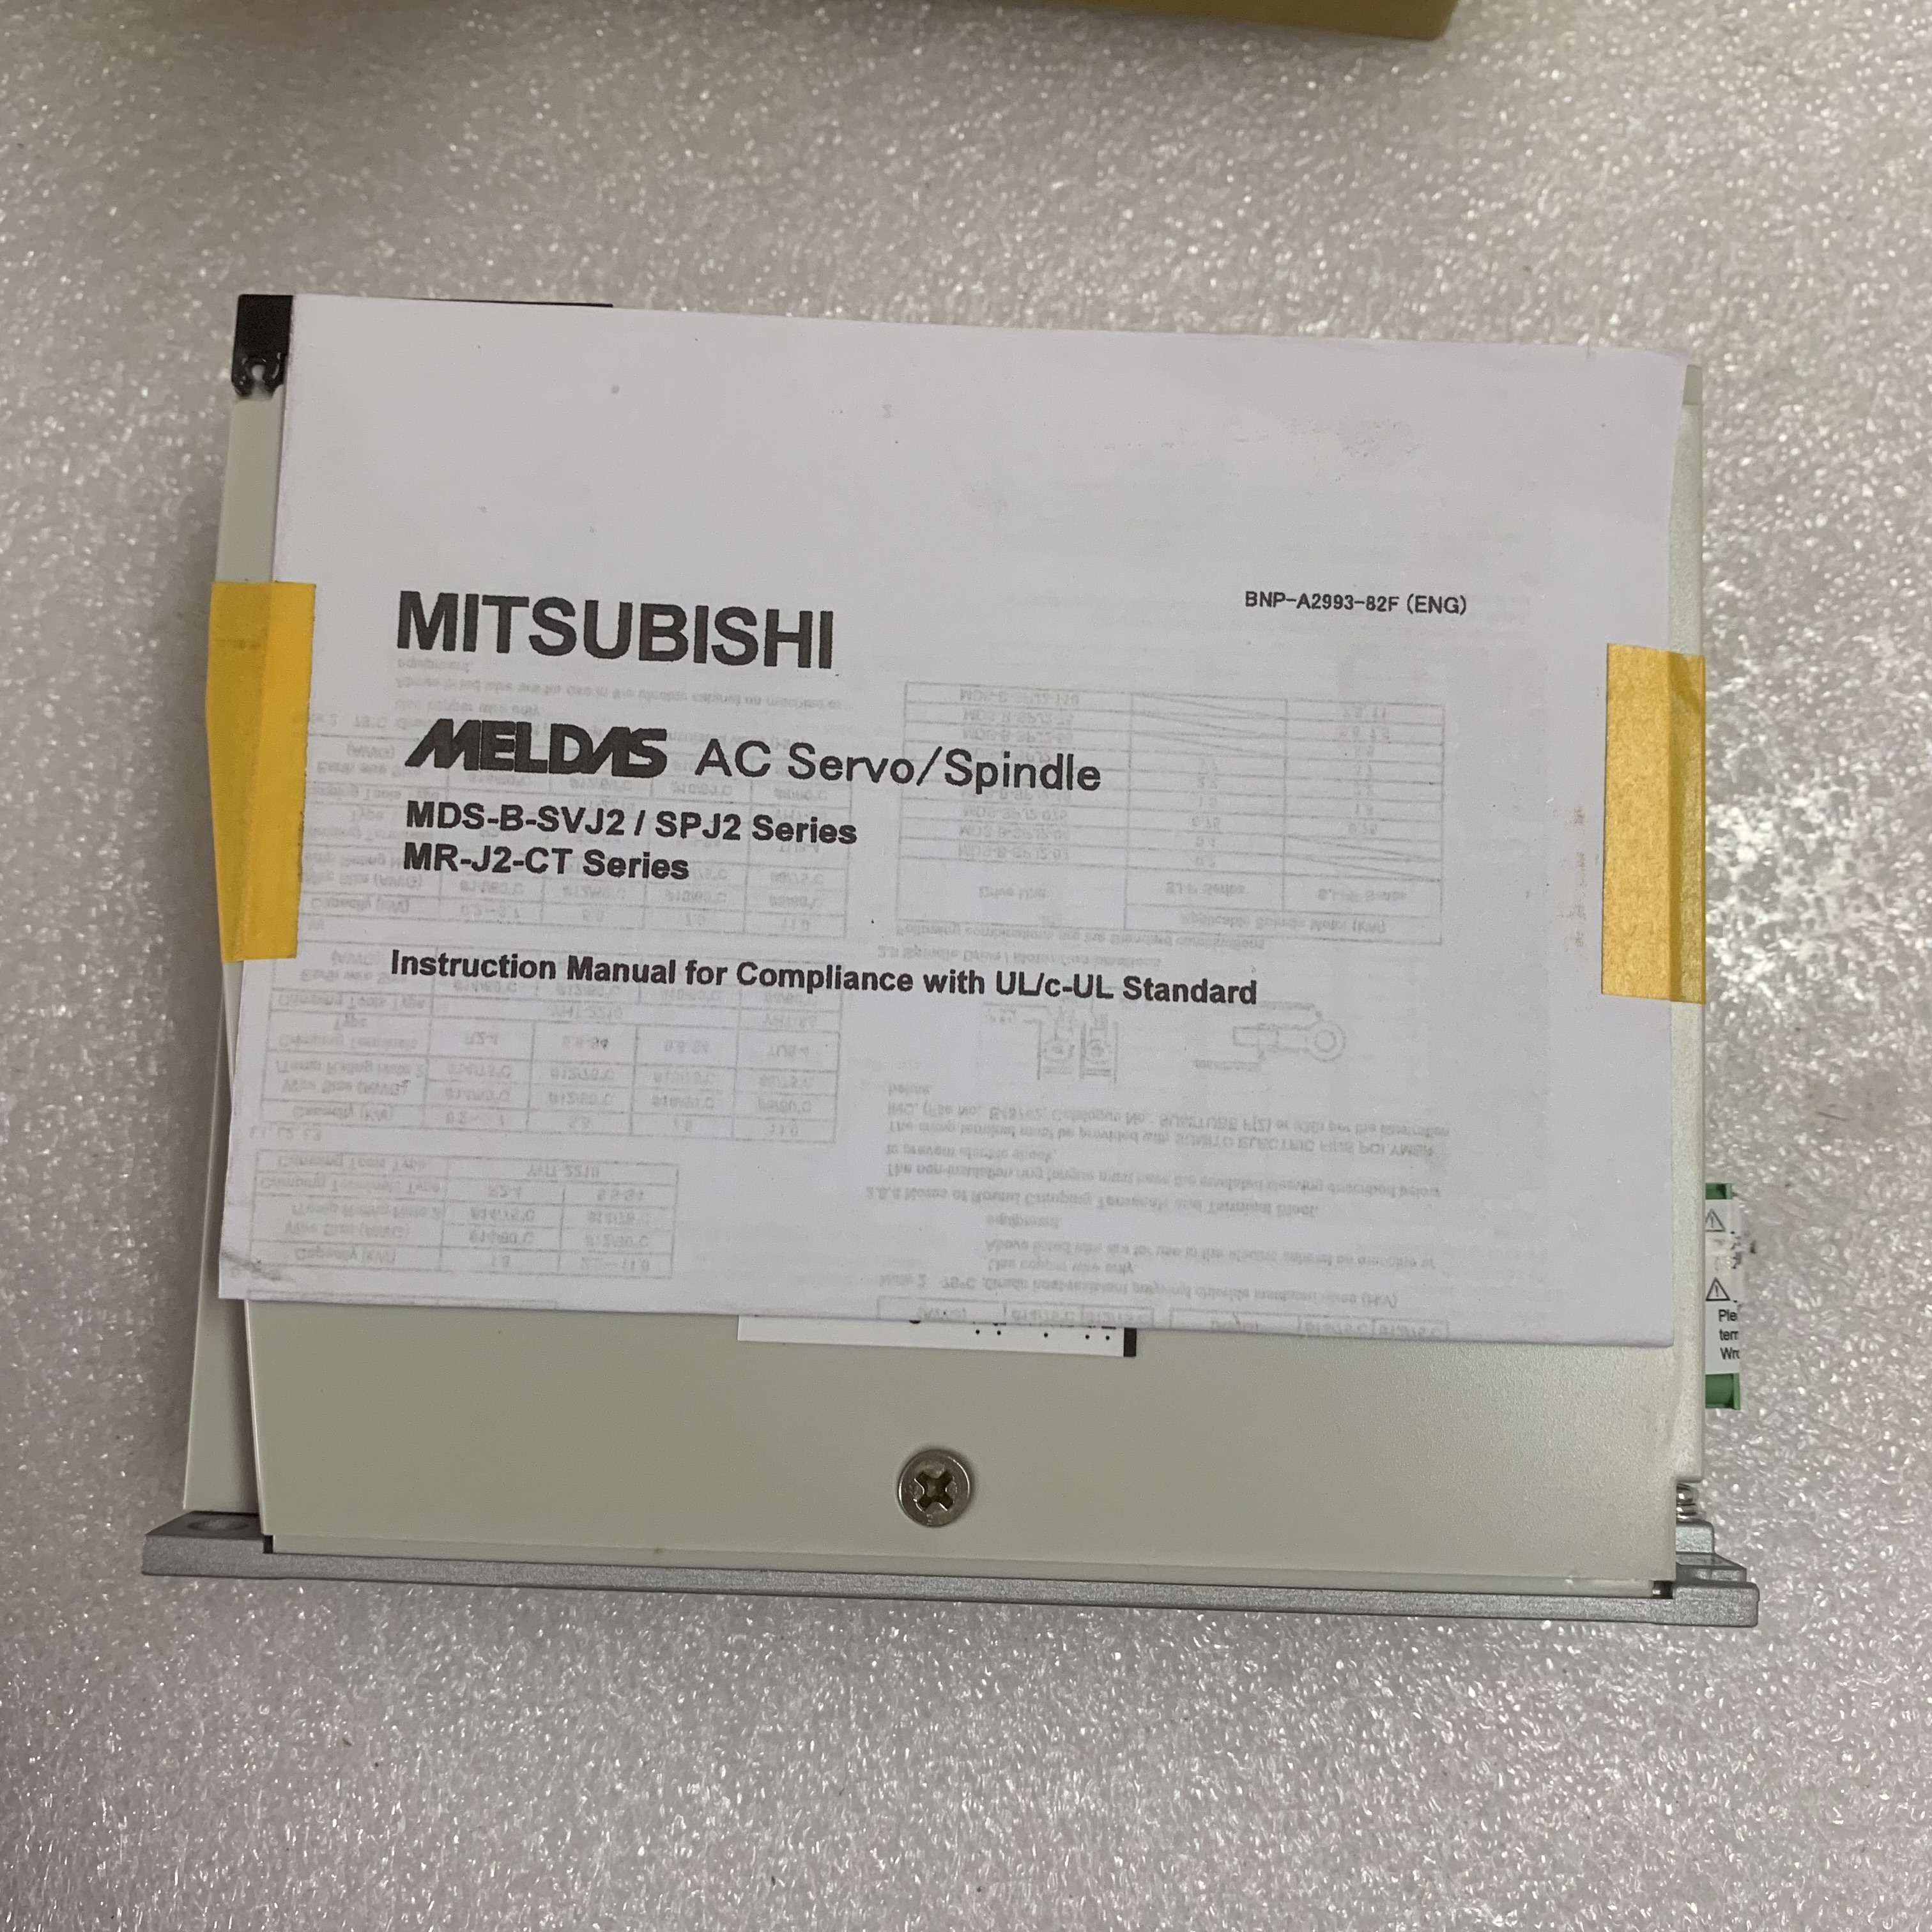 Mitsubishi MDS-B-SVJ2-04 SERVO DRIVE 0.4KW 0.3/2.8AMP 230V 50/60 HZ NEW